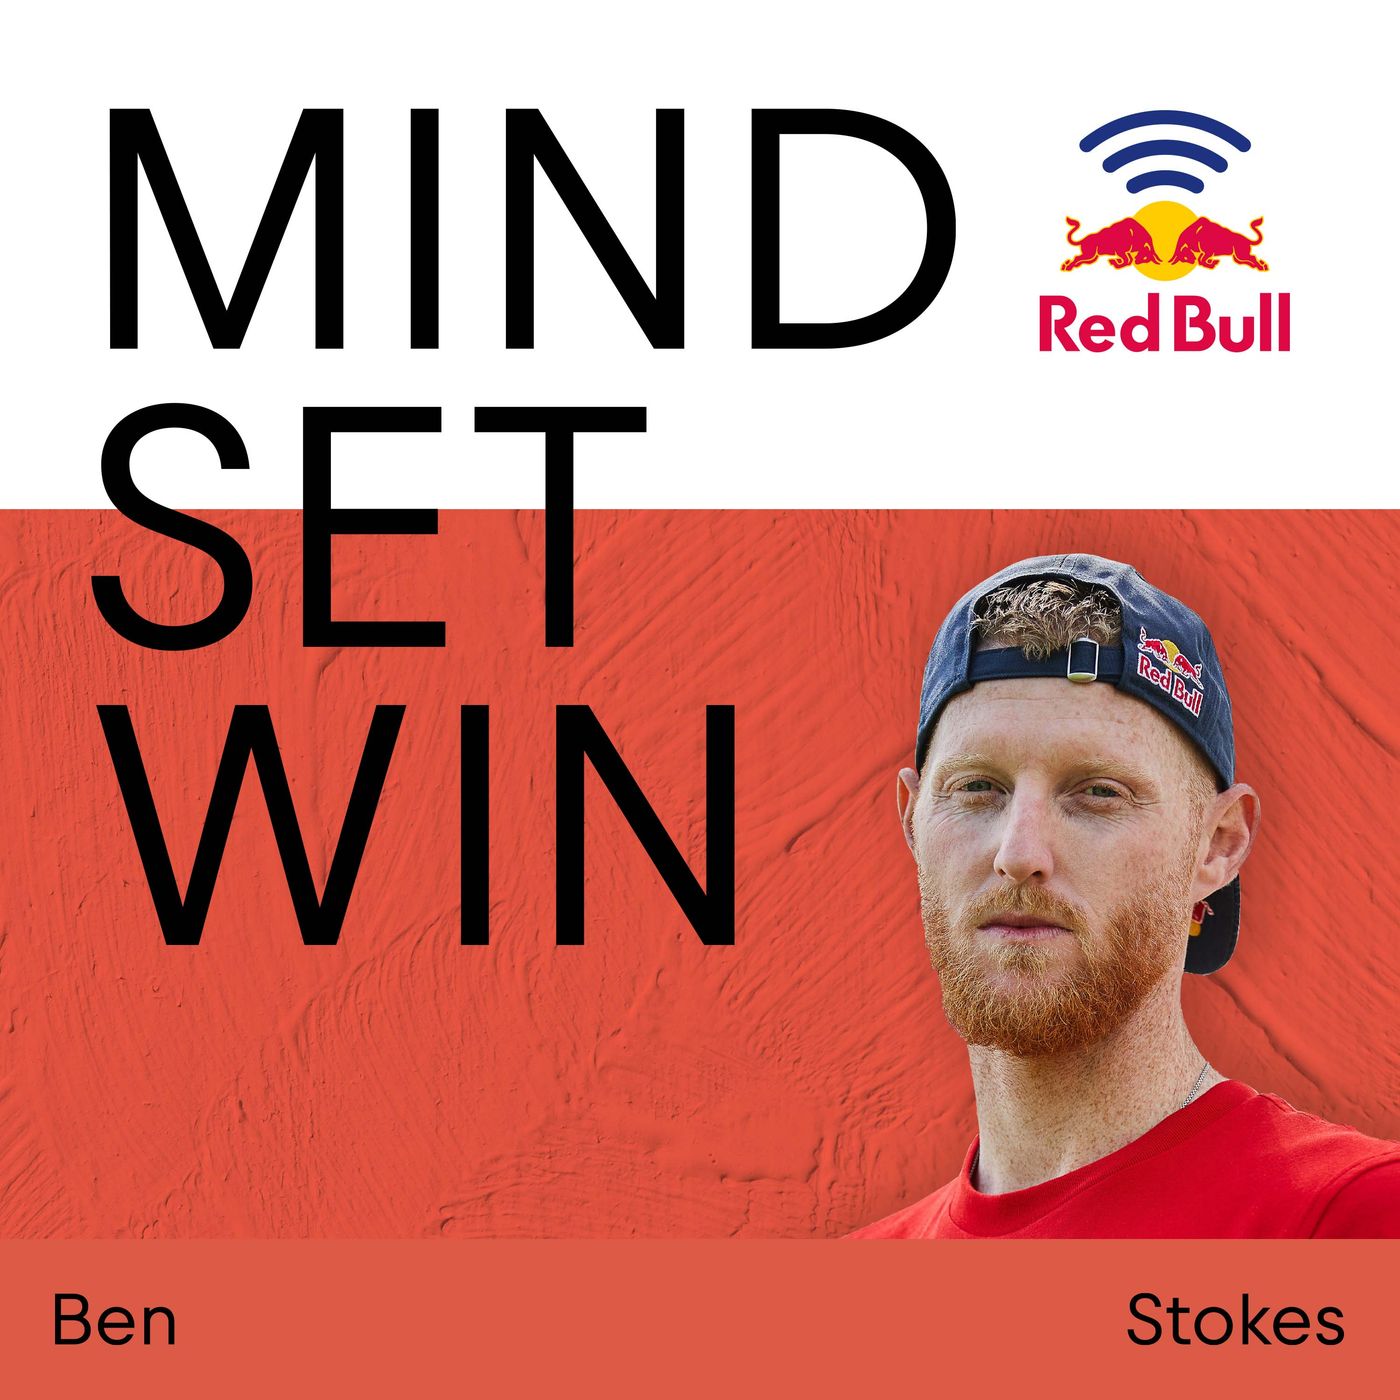 England Test Cricket captain Ben Stokes – developing mental fitness